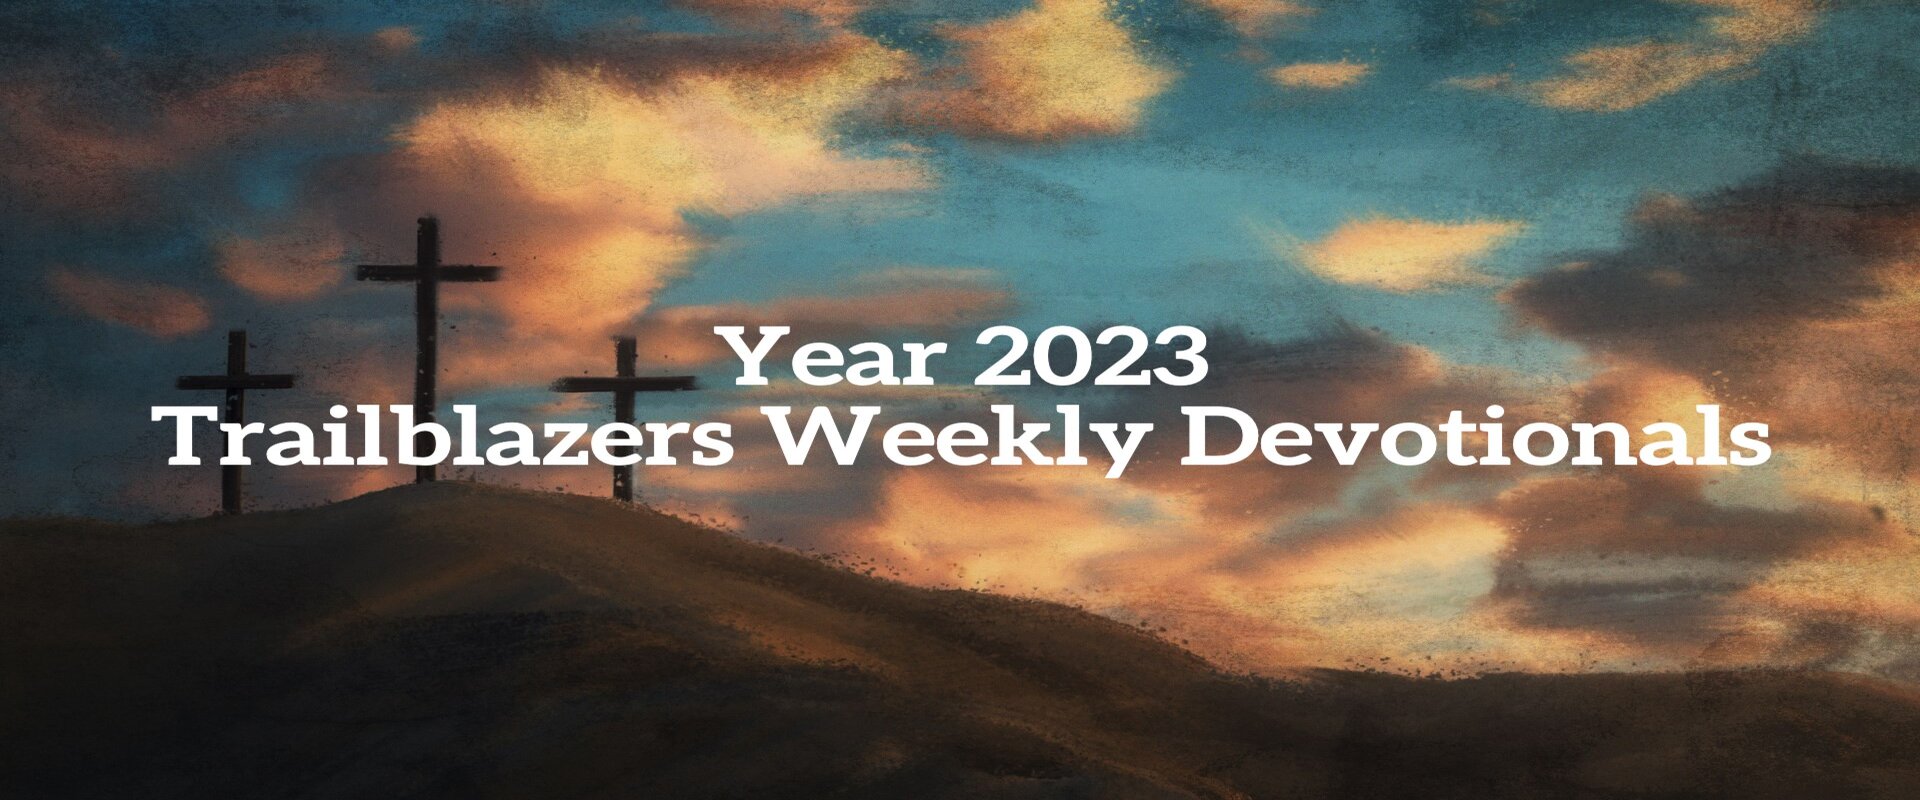 Year 2023 Trailblazers Weekly Devotionals